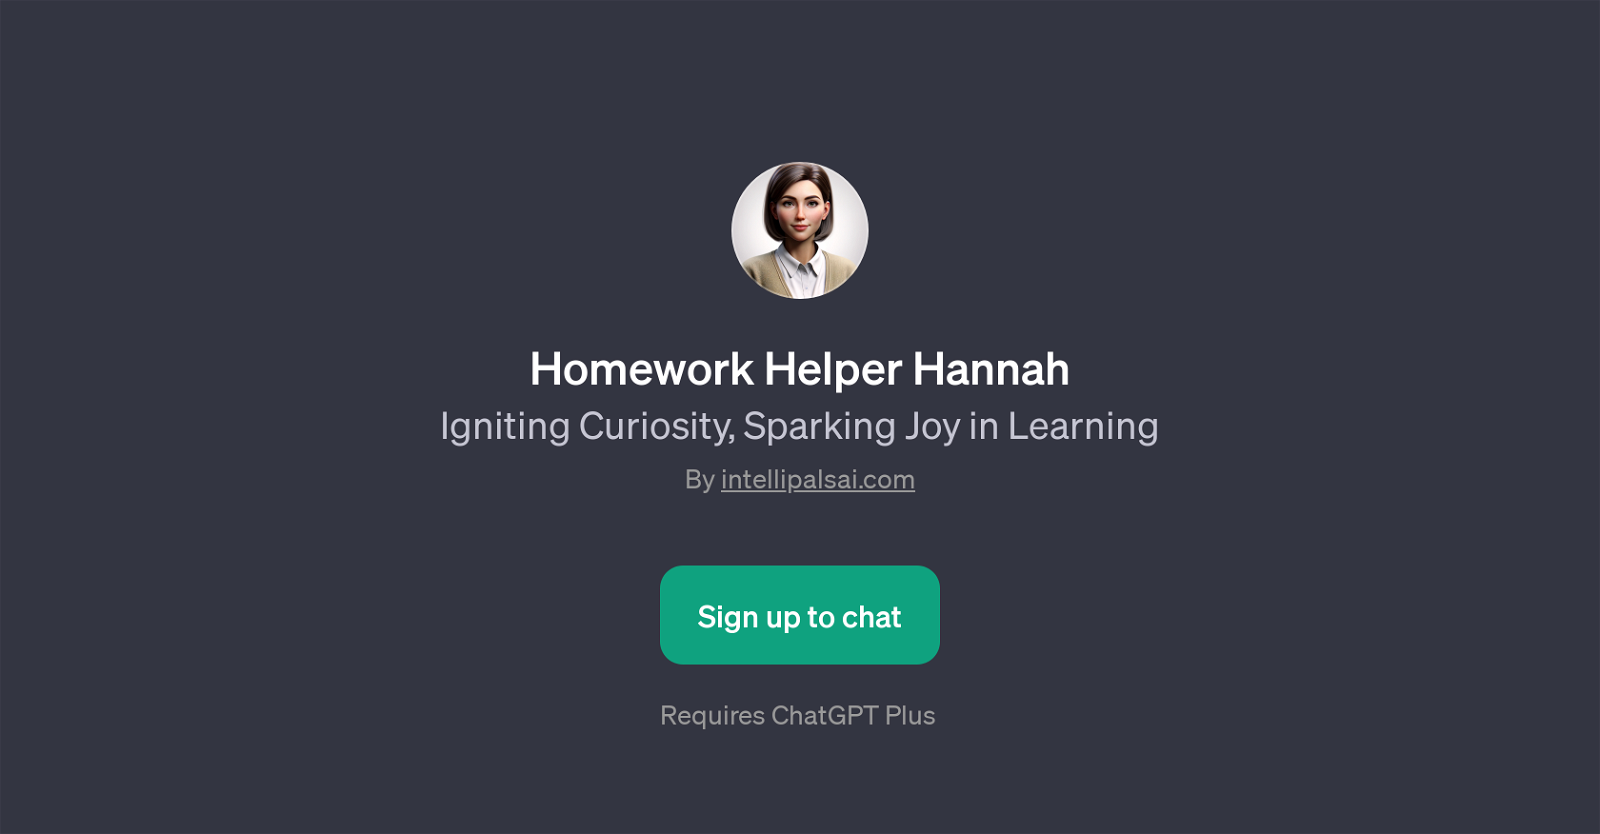 Homework Helper Hannah website